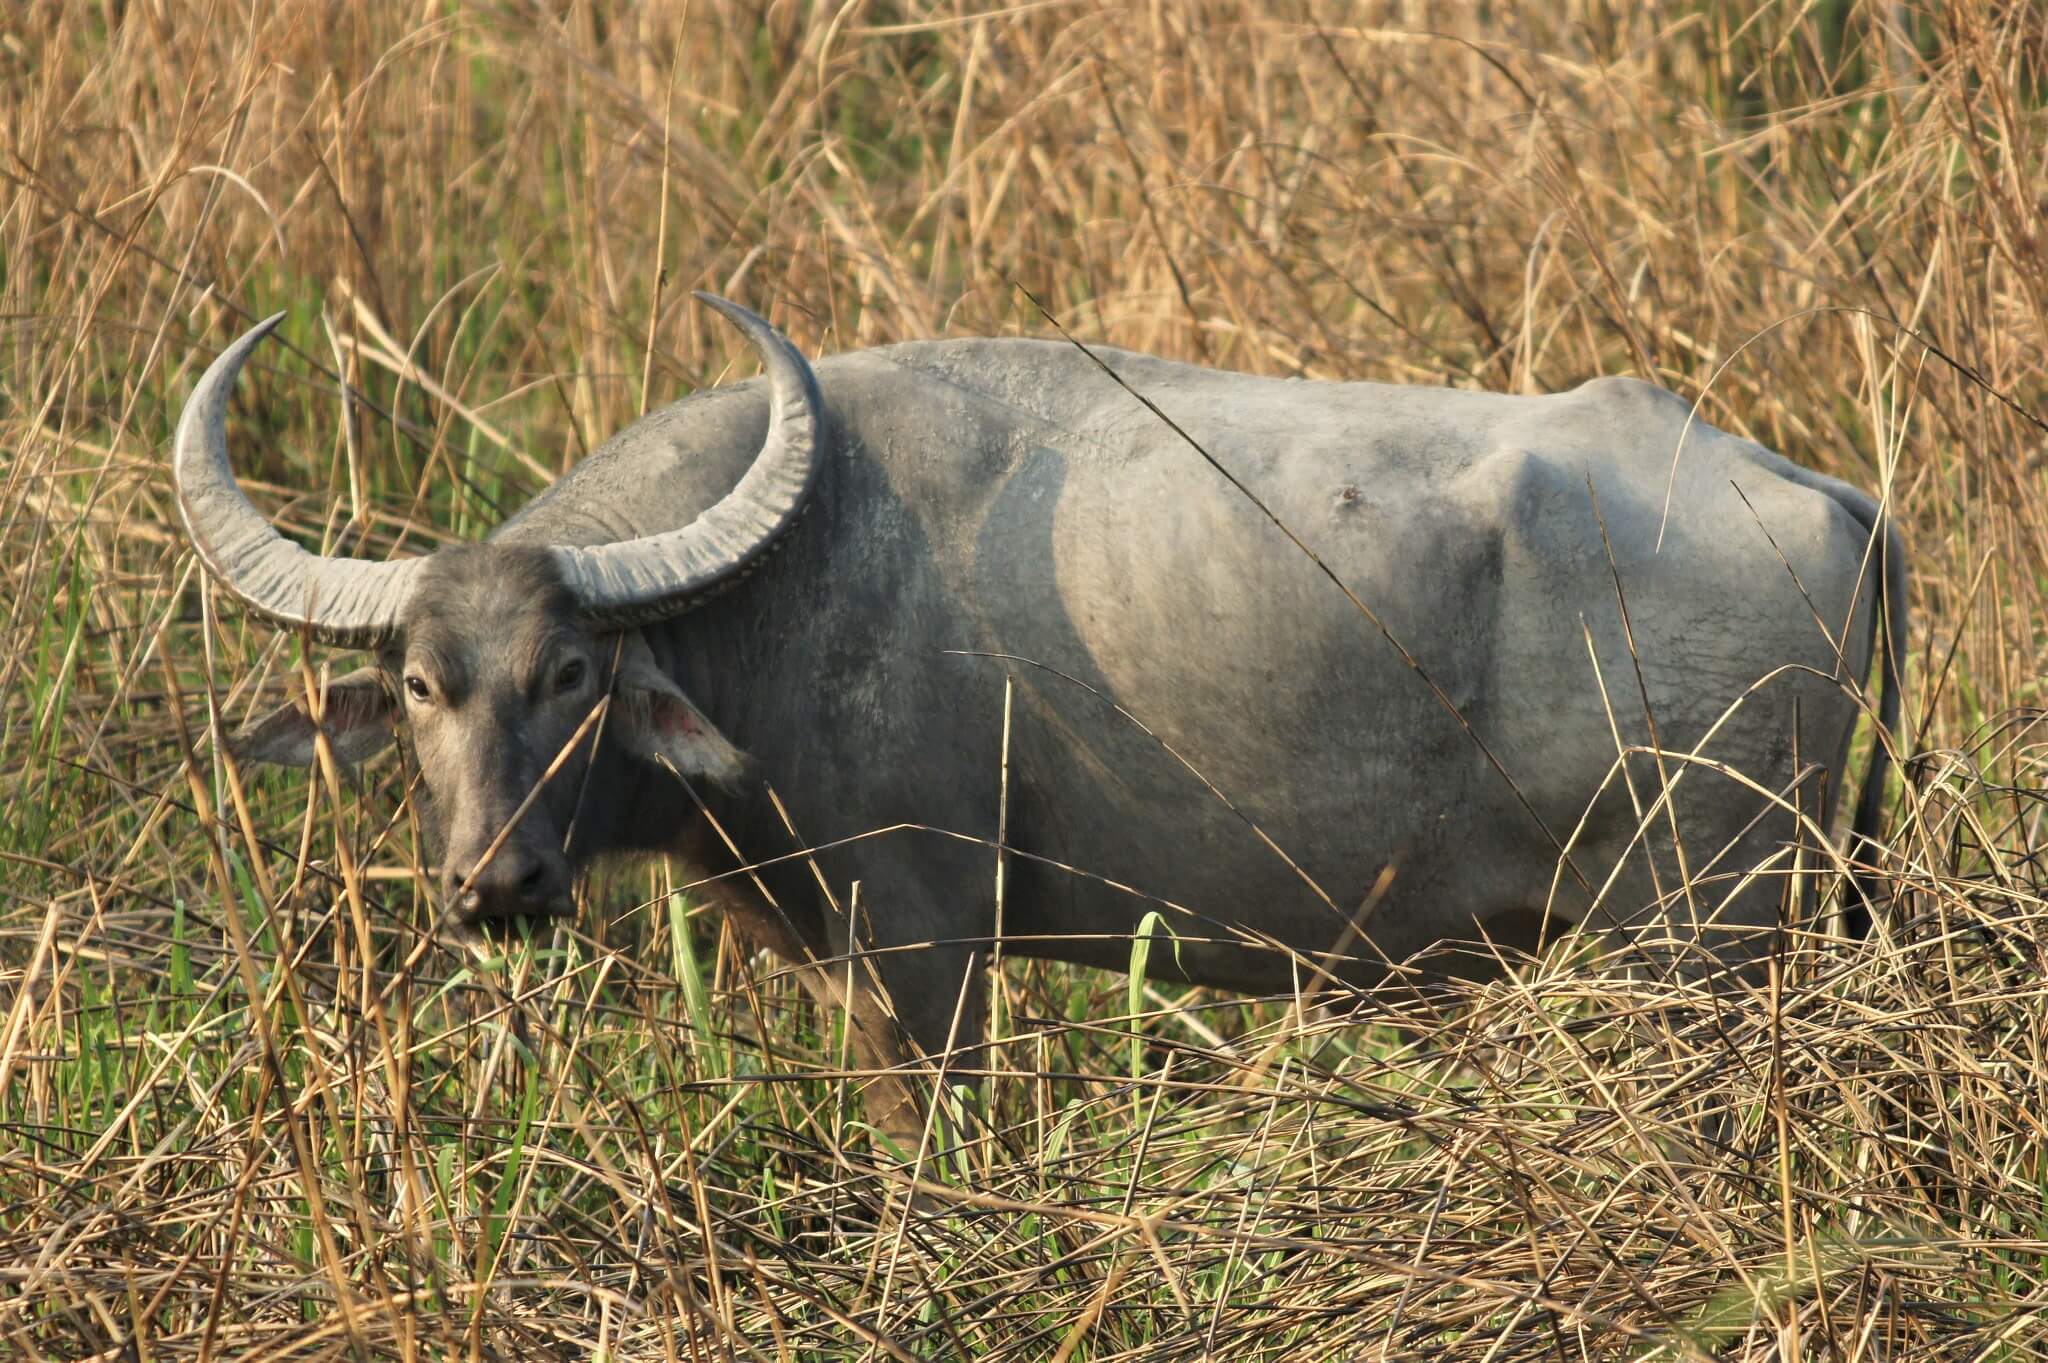 Indian Wild Buffalo | Asian Buffalo | Characteristics | Habitat